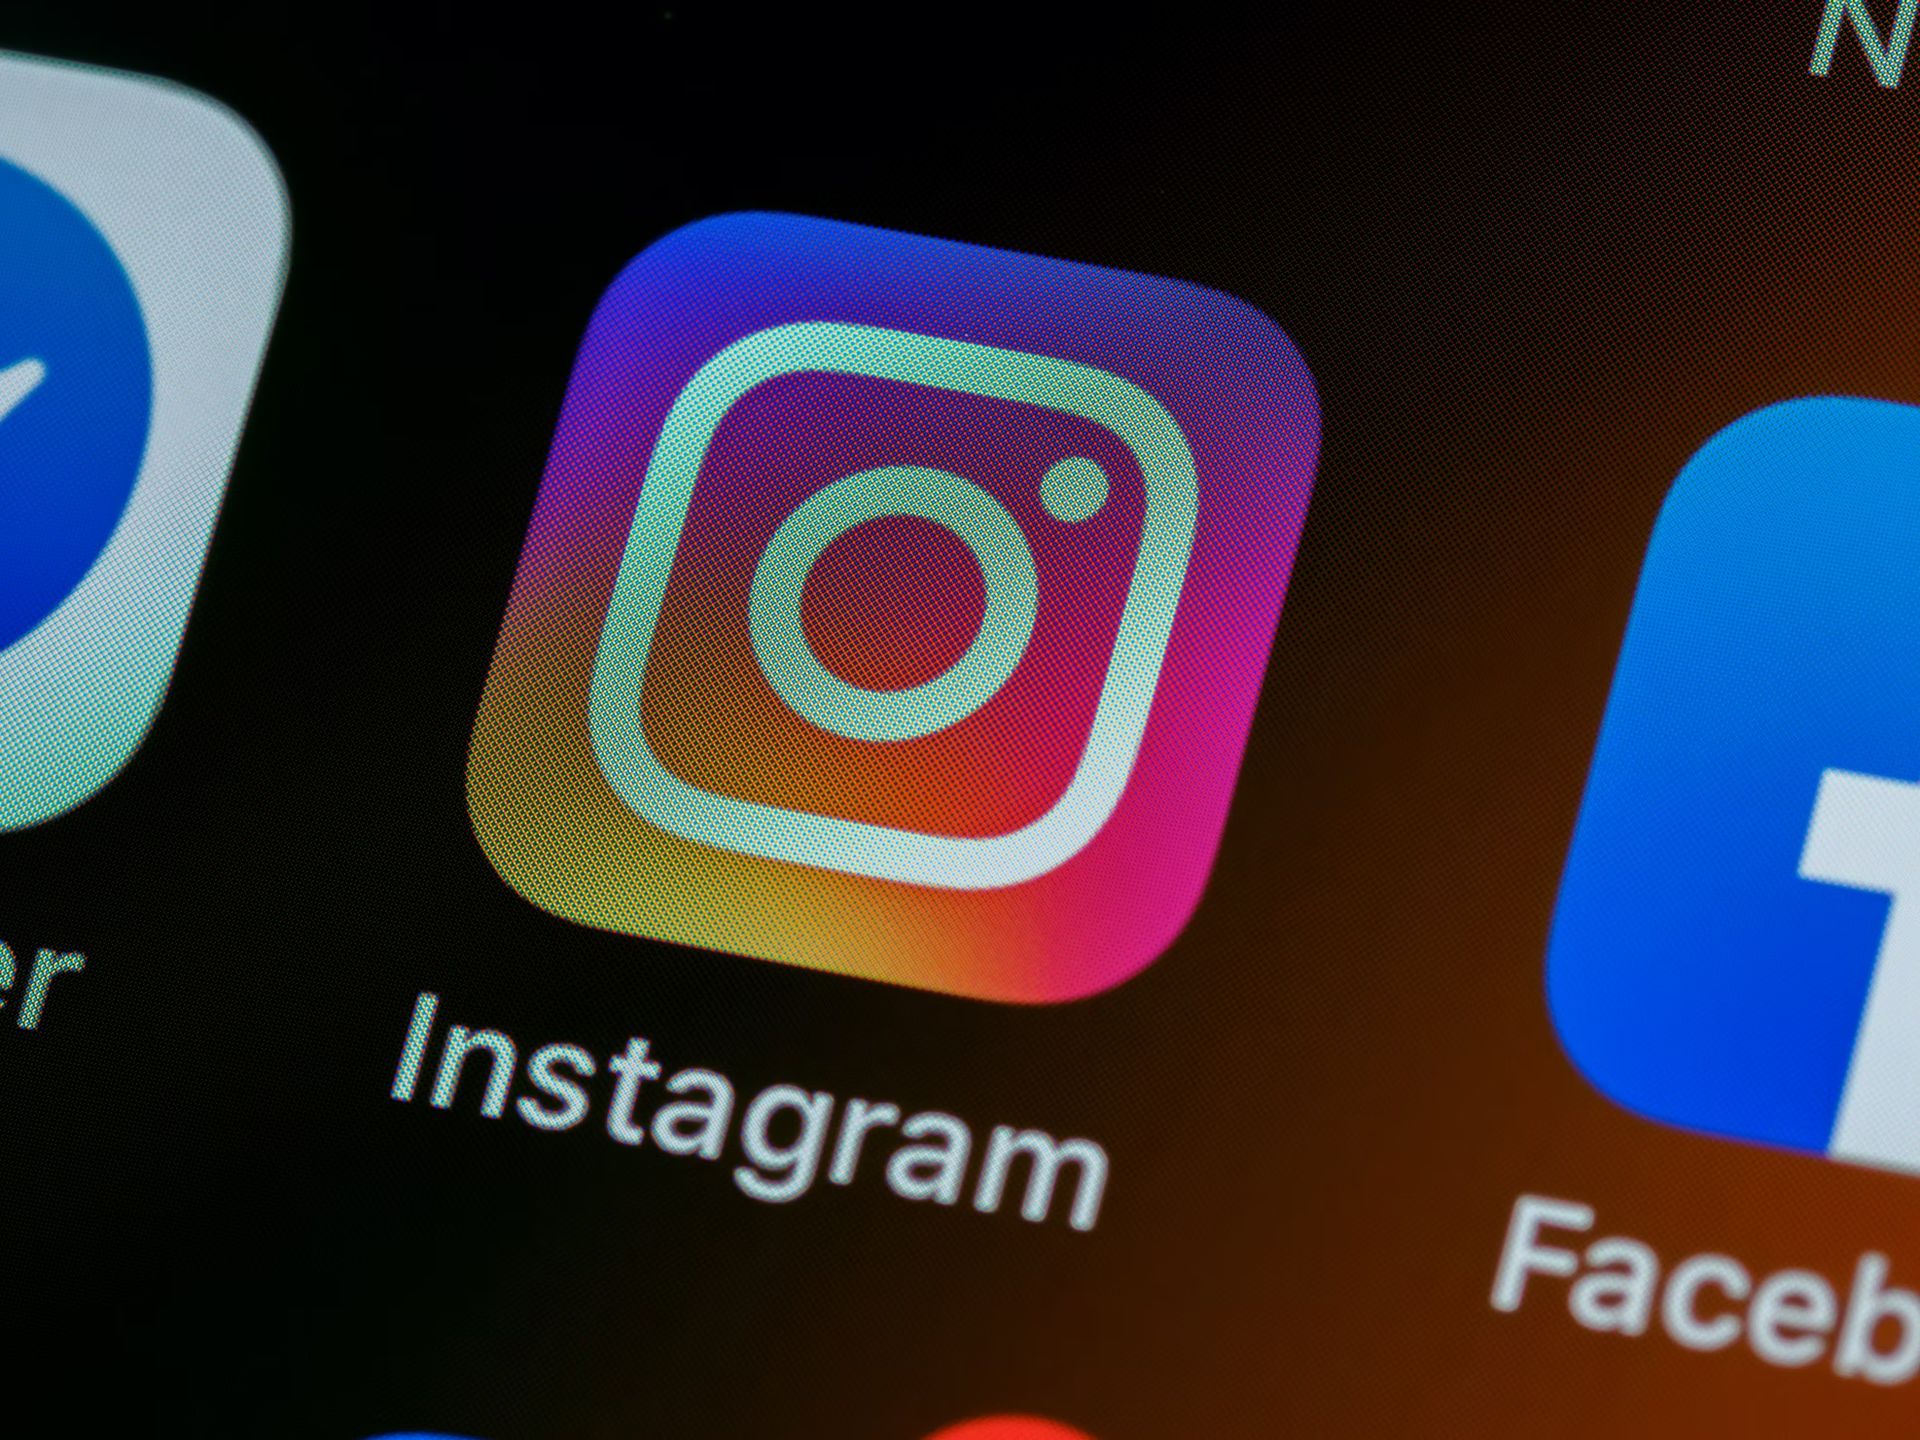 Instagram NFT integration program is expanding across 100 countries